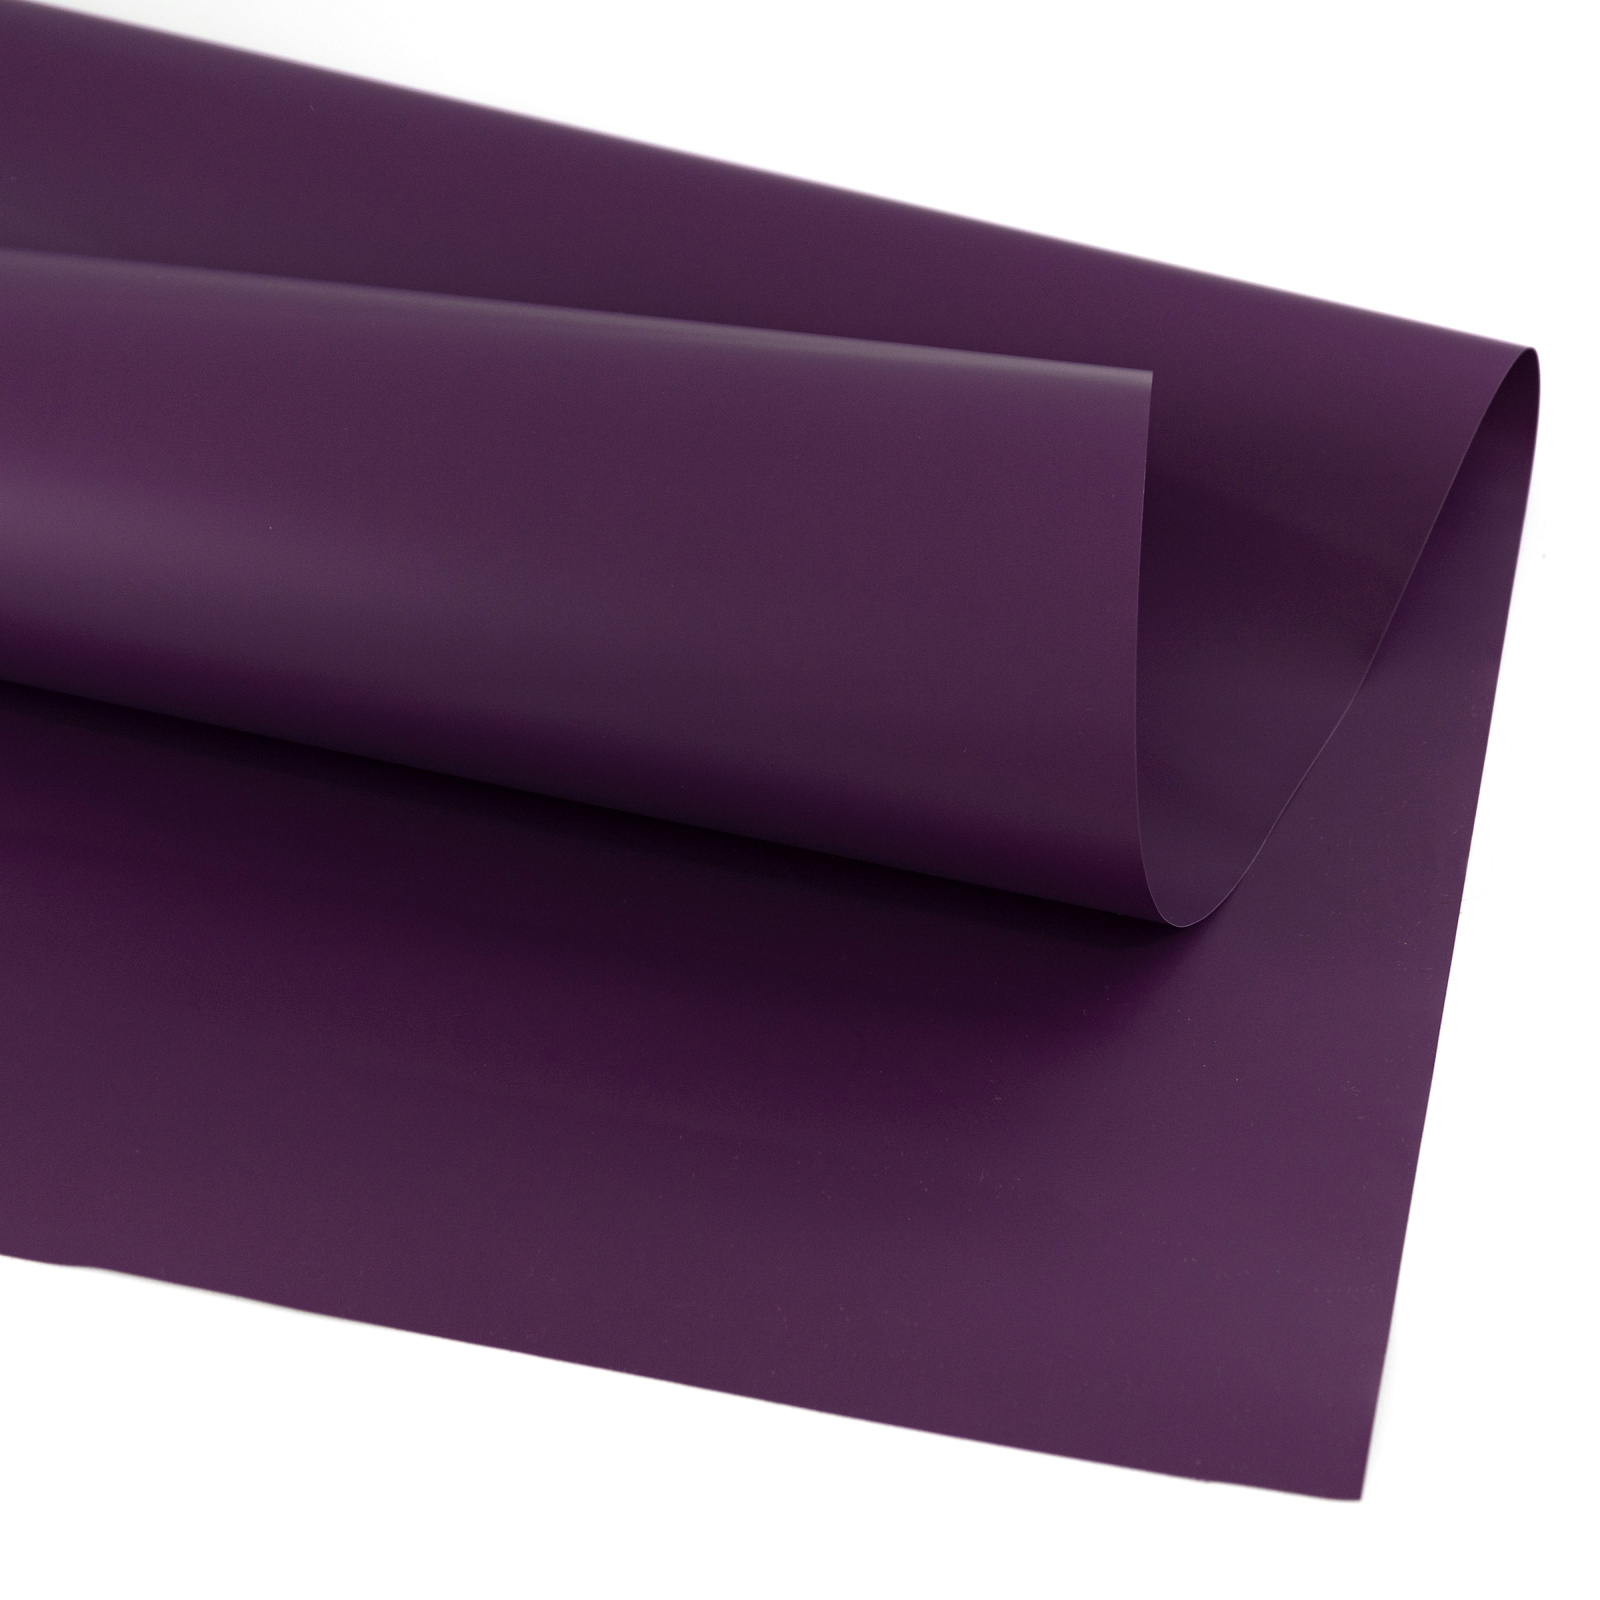 VP-21, Пленка матовая 50 см 10 м, фиолетовый, 2009980169507